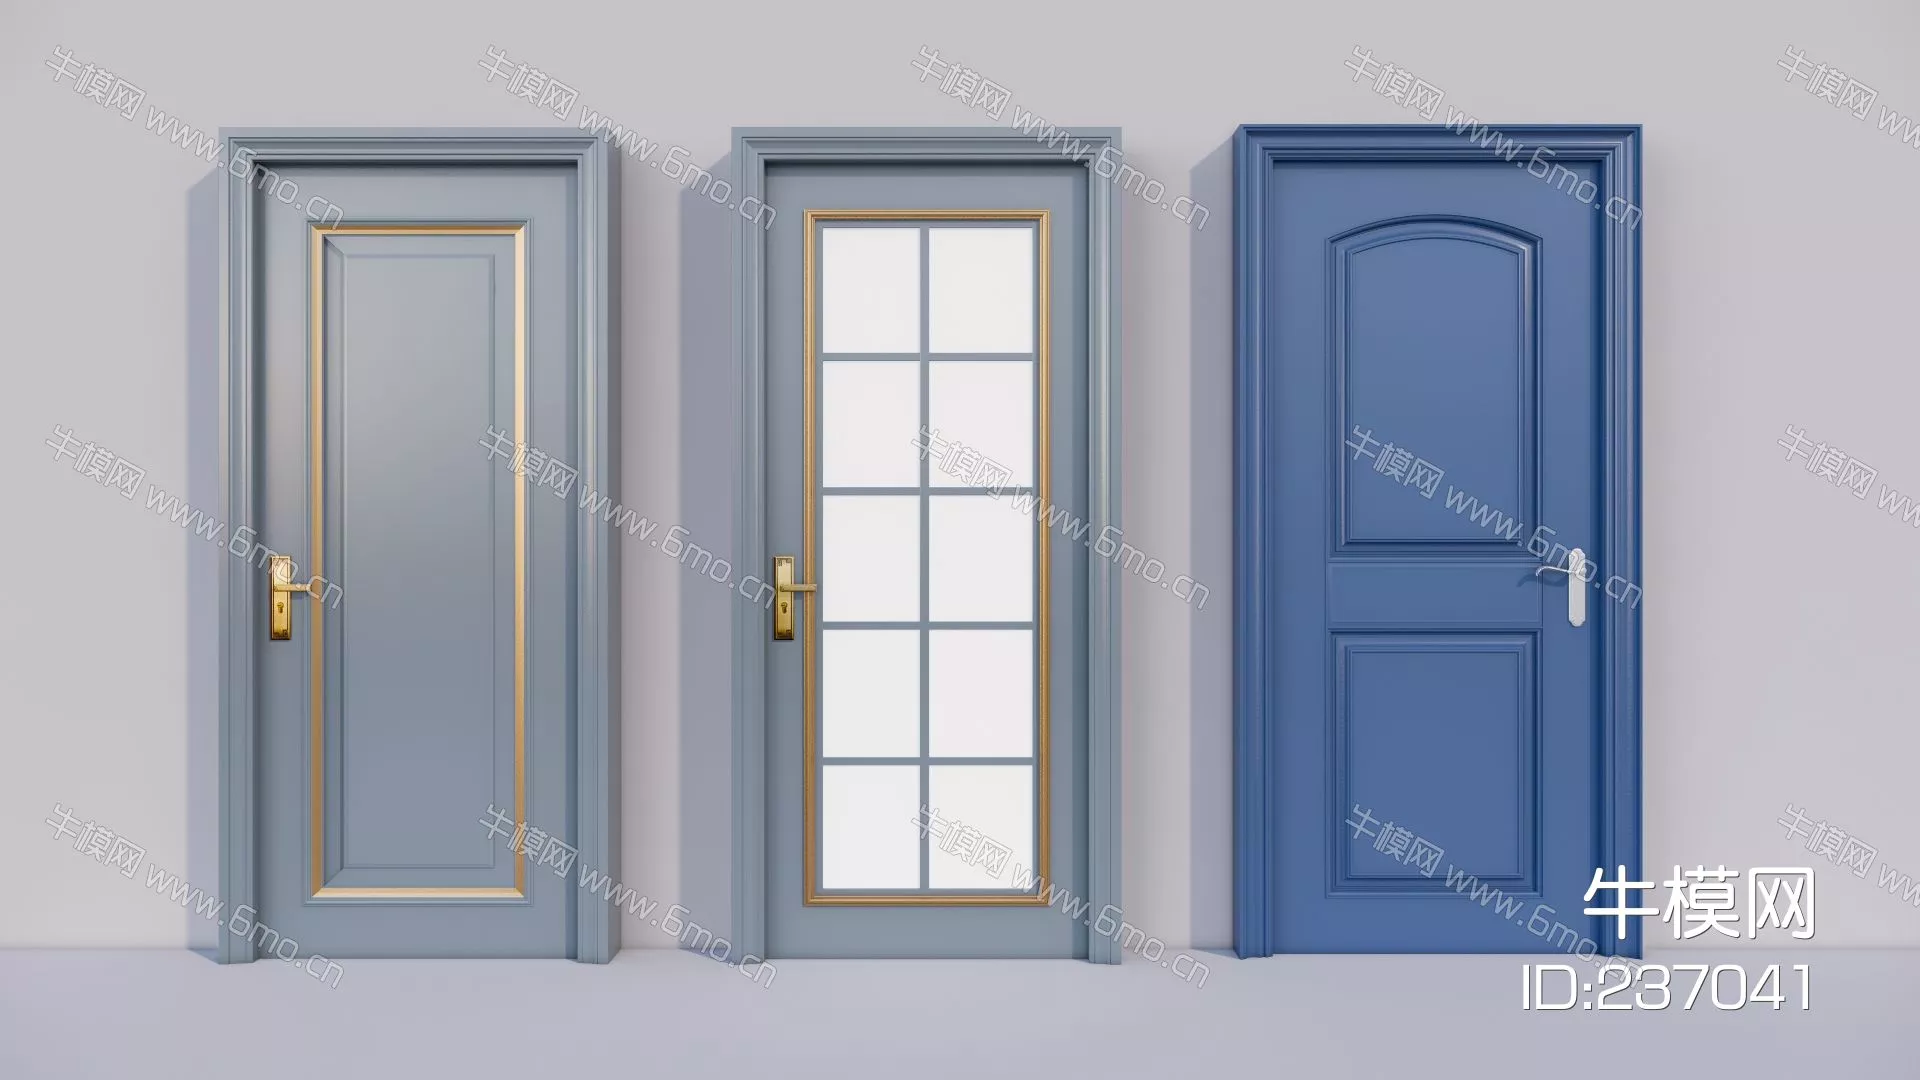 MODERN DOOR AND WINDOWS - SKETCHUP 3D MODEL - ENSCAPE - 237041